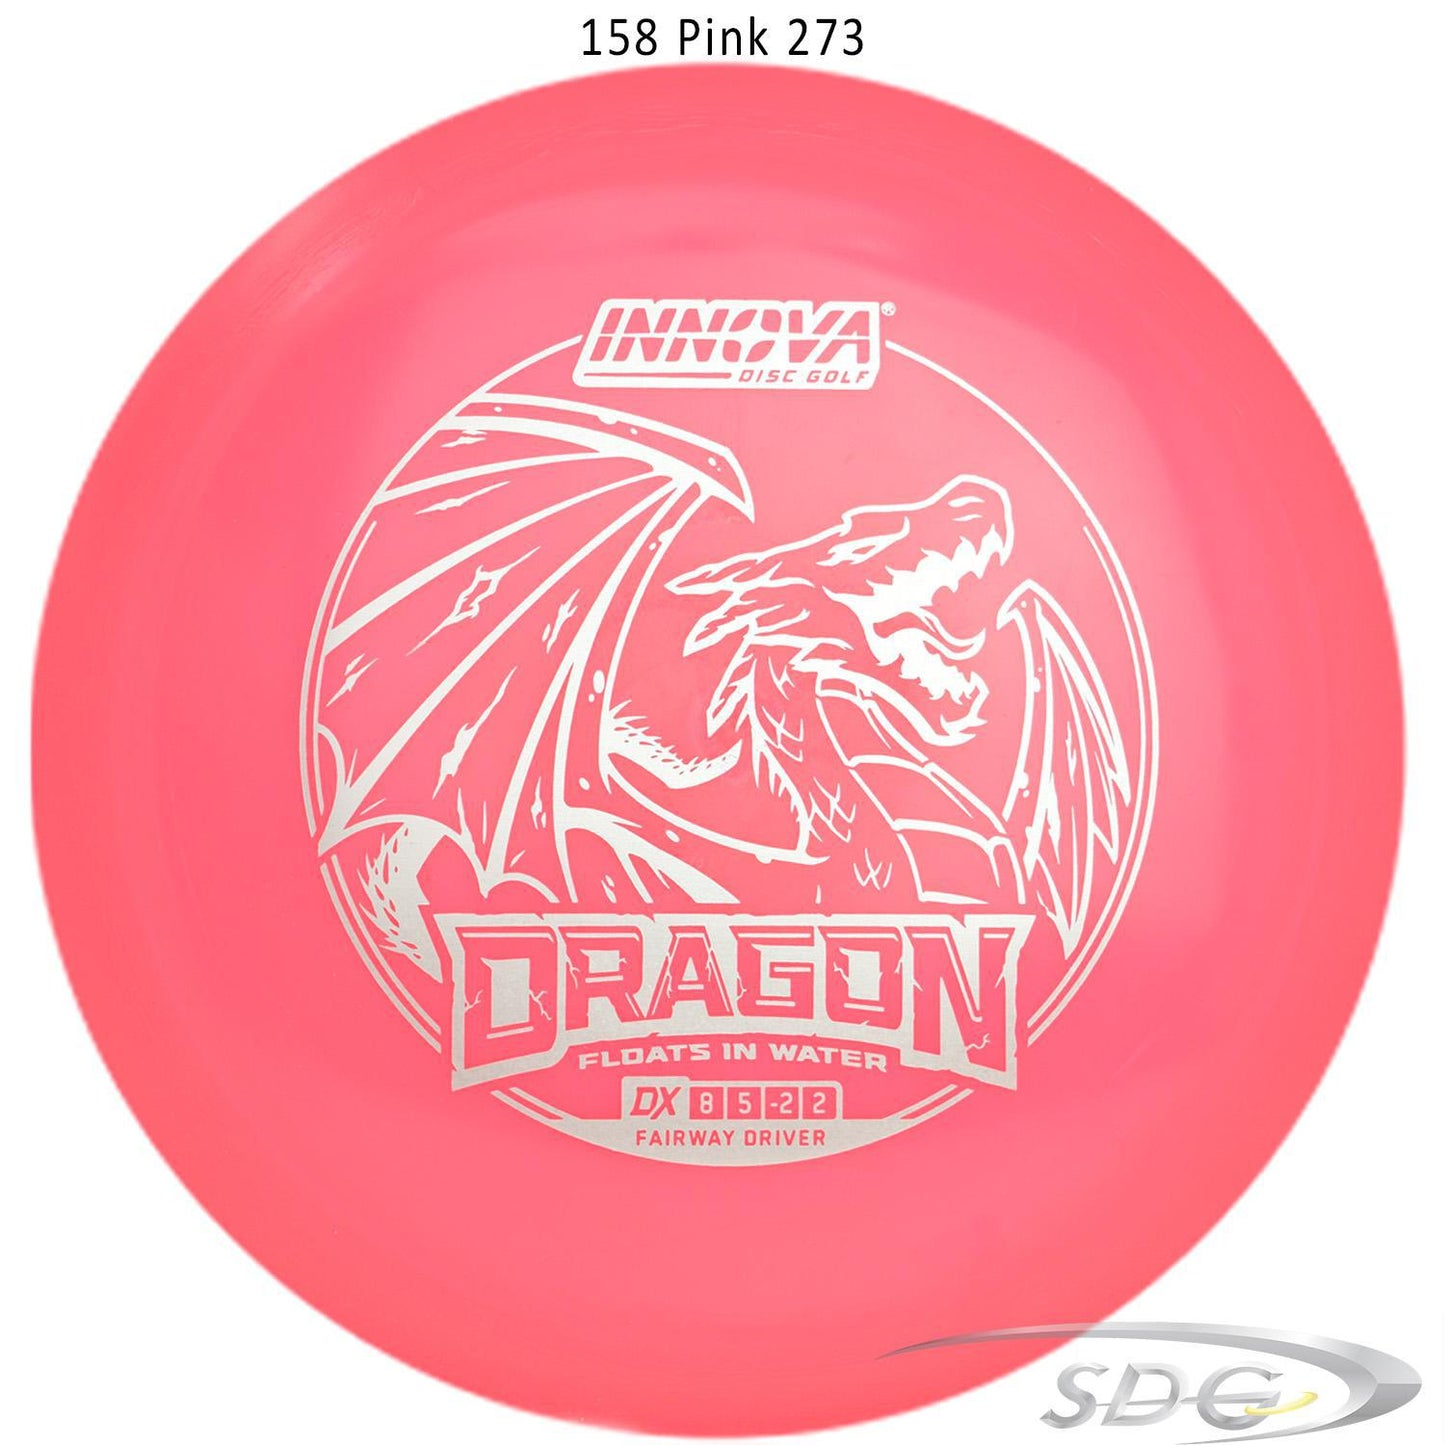 innova-dx-dragon-disc-golf-fairway-driver 158 Pink 273 